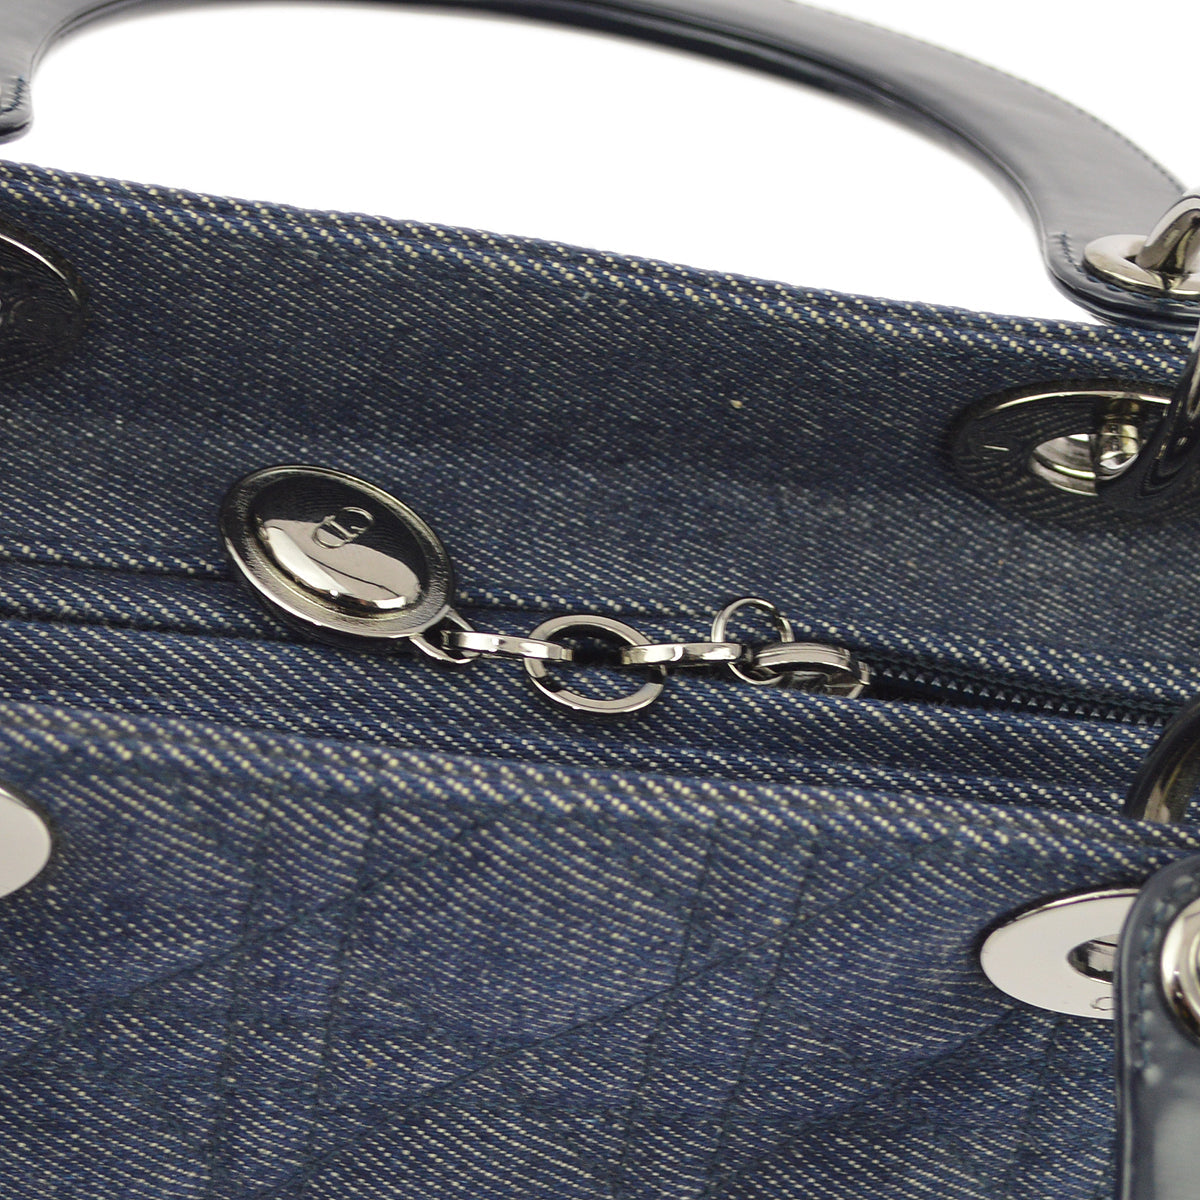 Christian Dior Navy Lady Dior Cannage 2way Shoulder Handbag